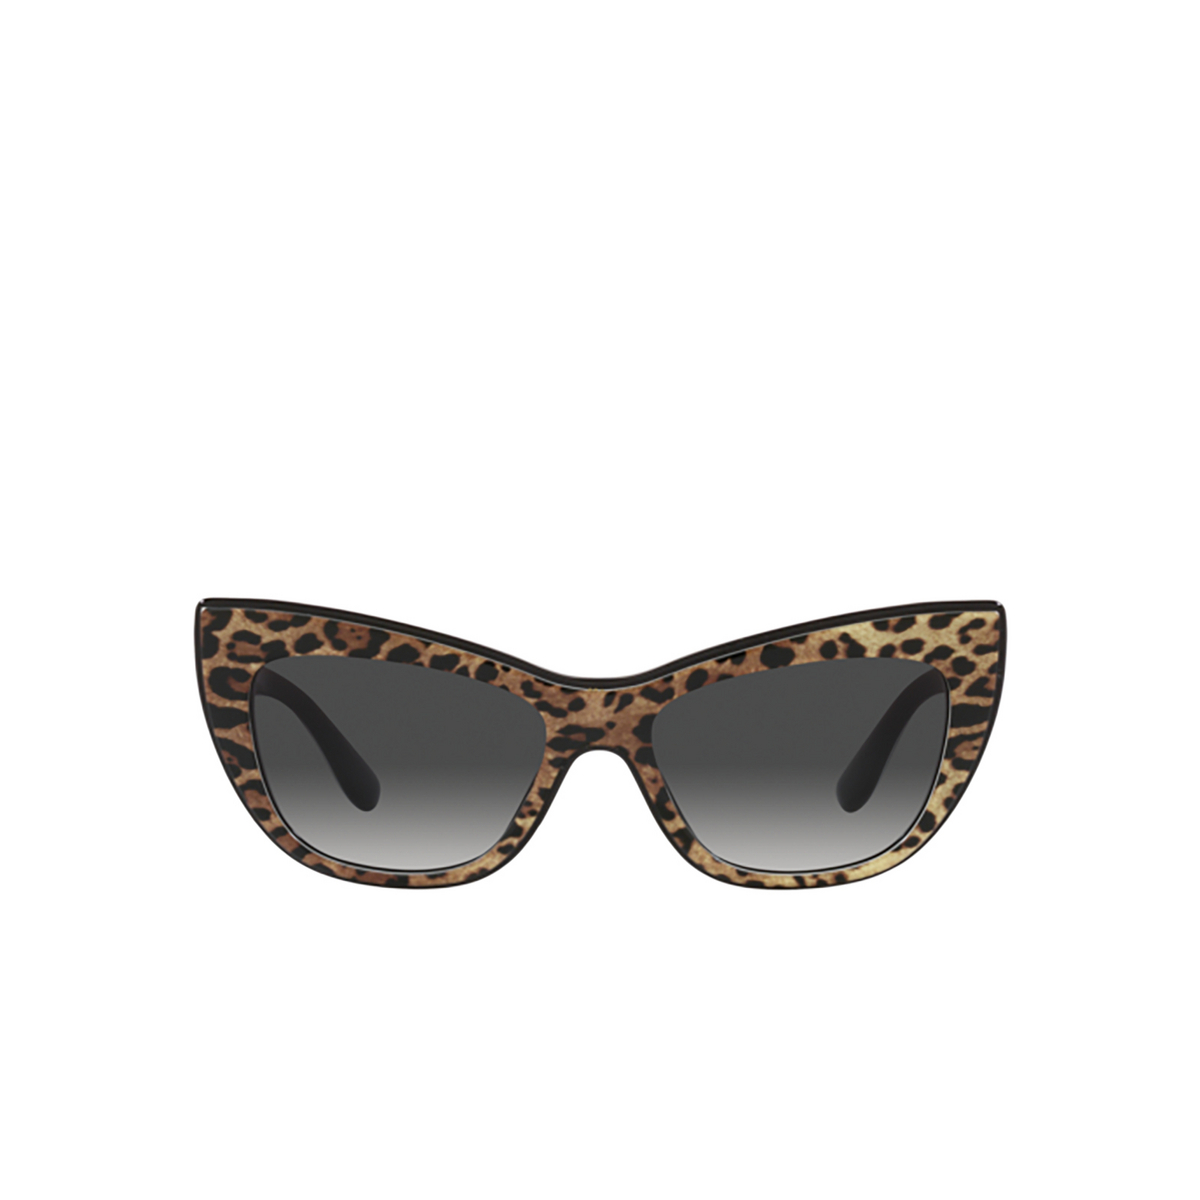 Dolce & Gabbana DG4417 Sunglasses 31638G Leo Brown / Black - front view